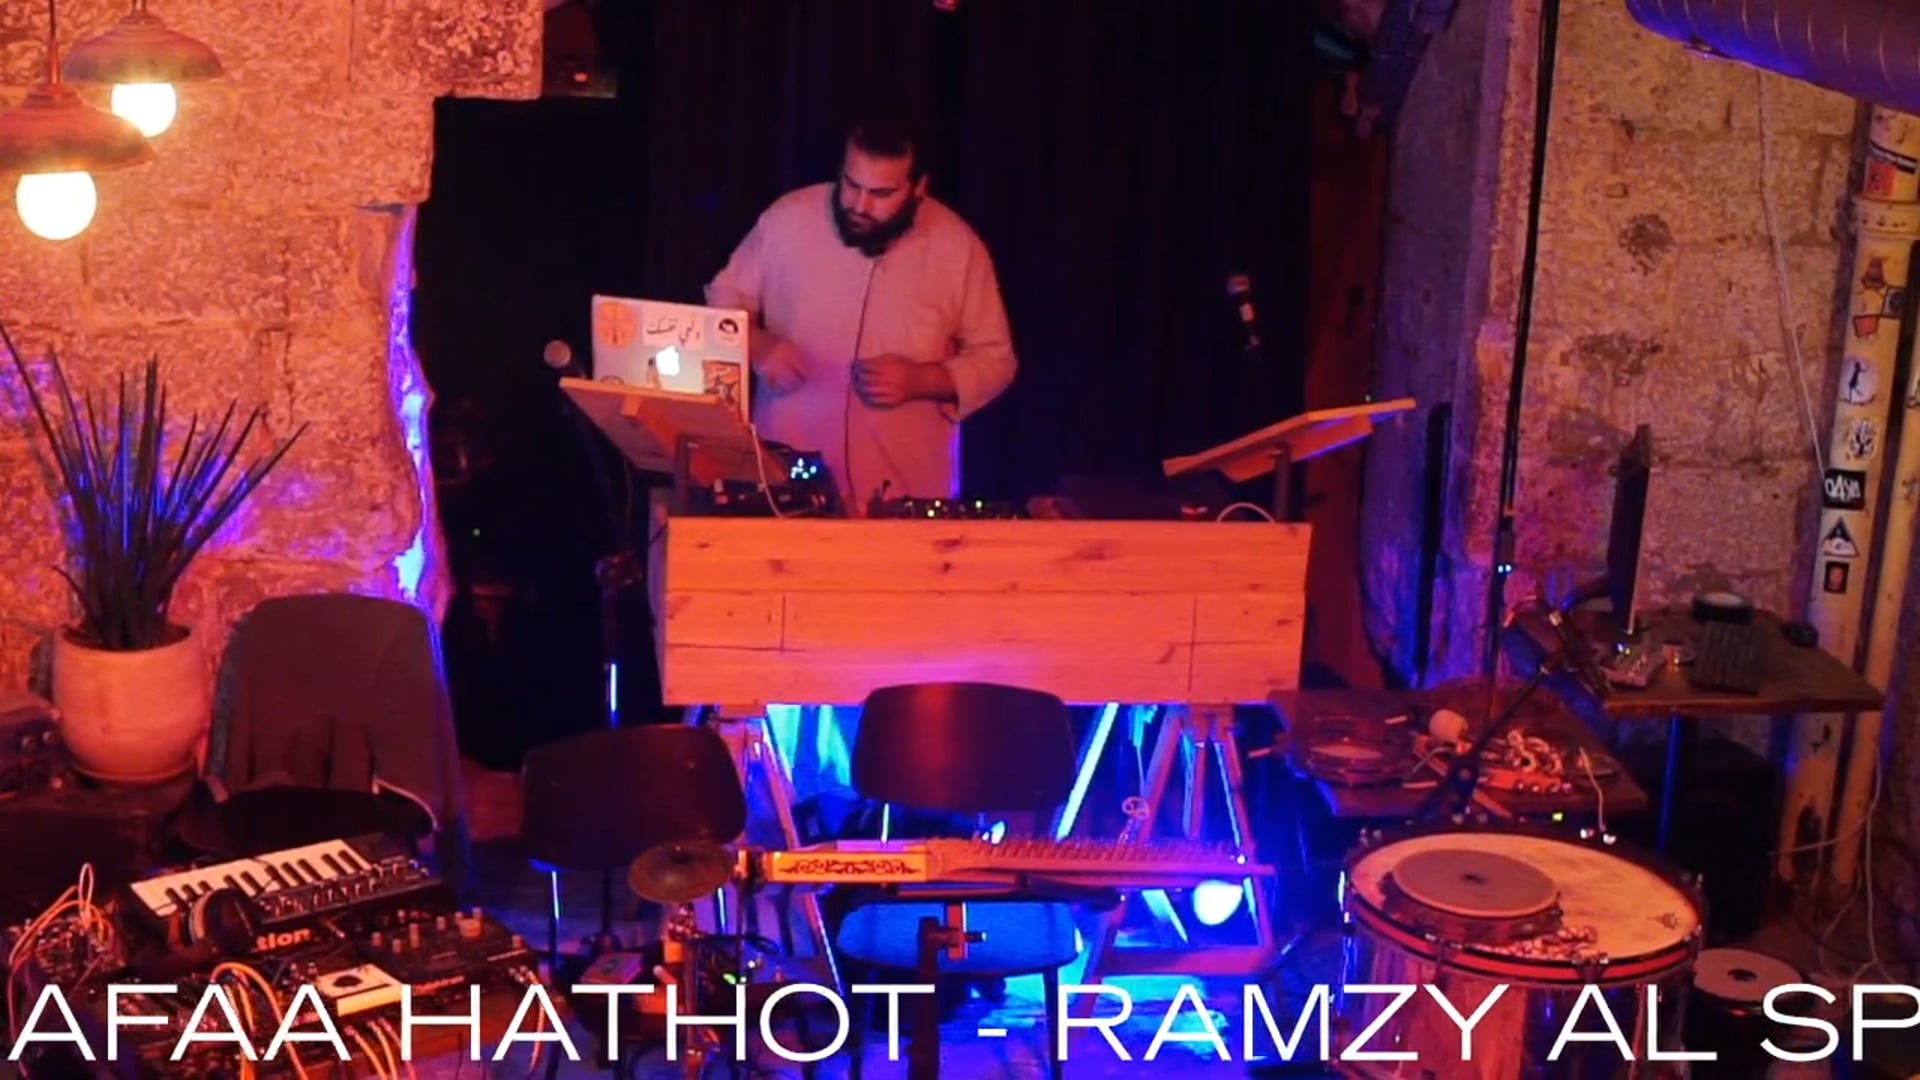 DJ RAMZY AL SPINOZA & MC Safaa Hathot